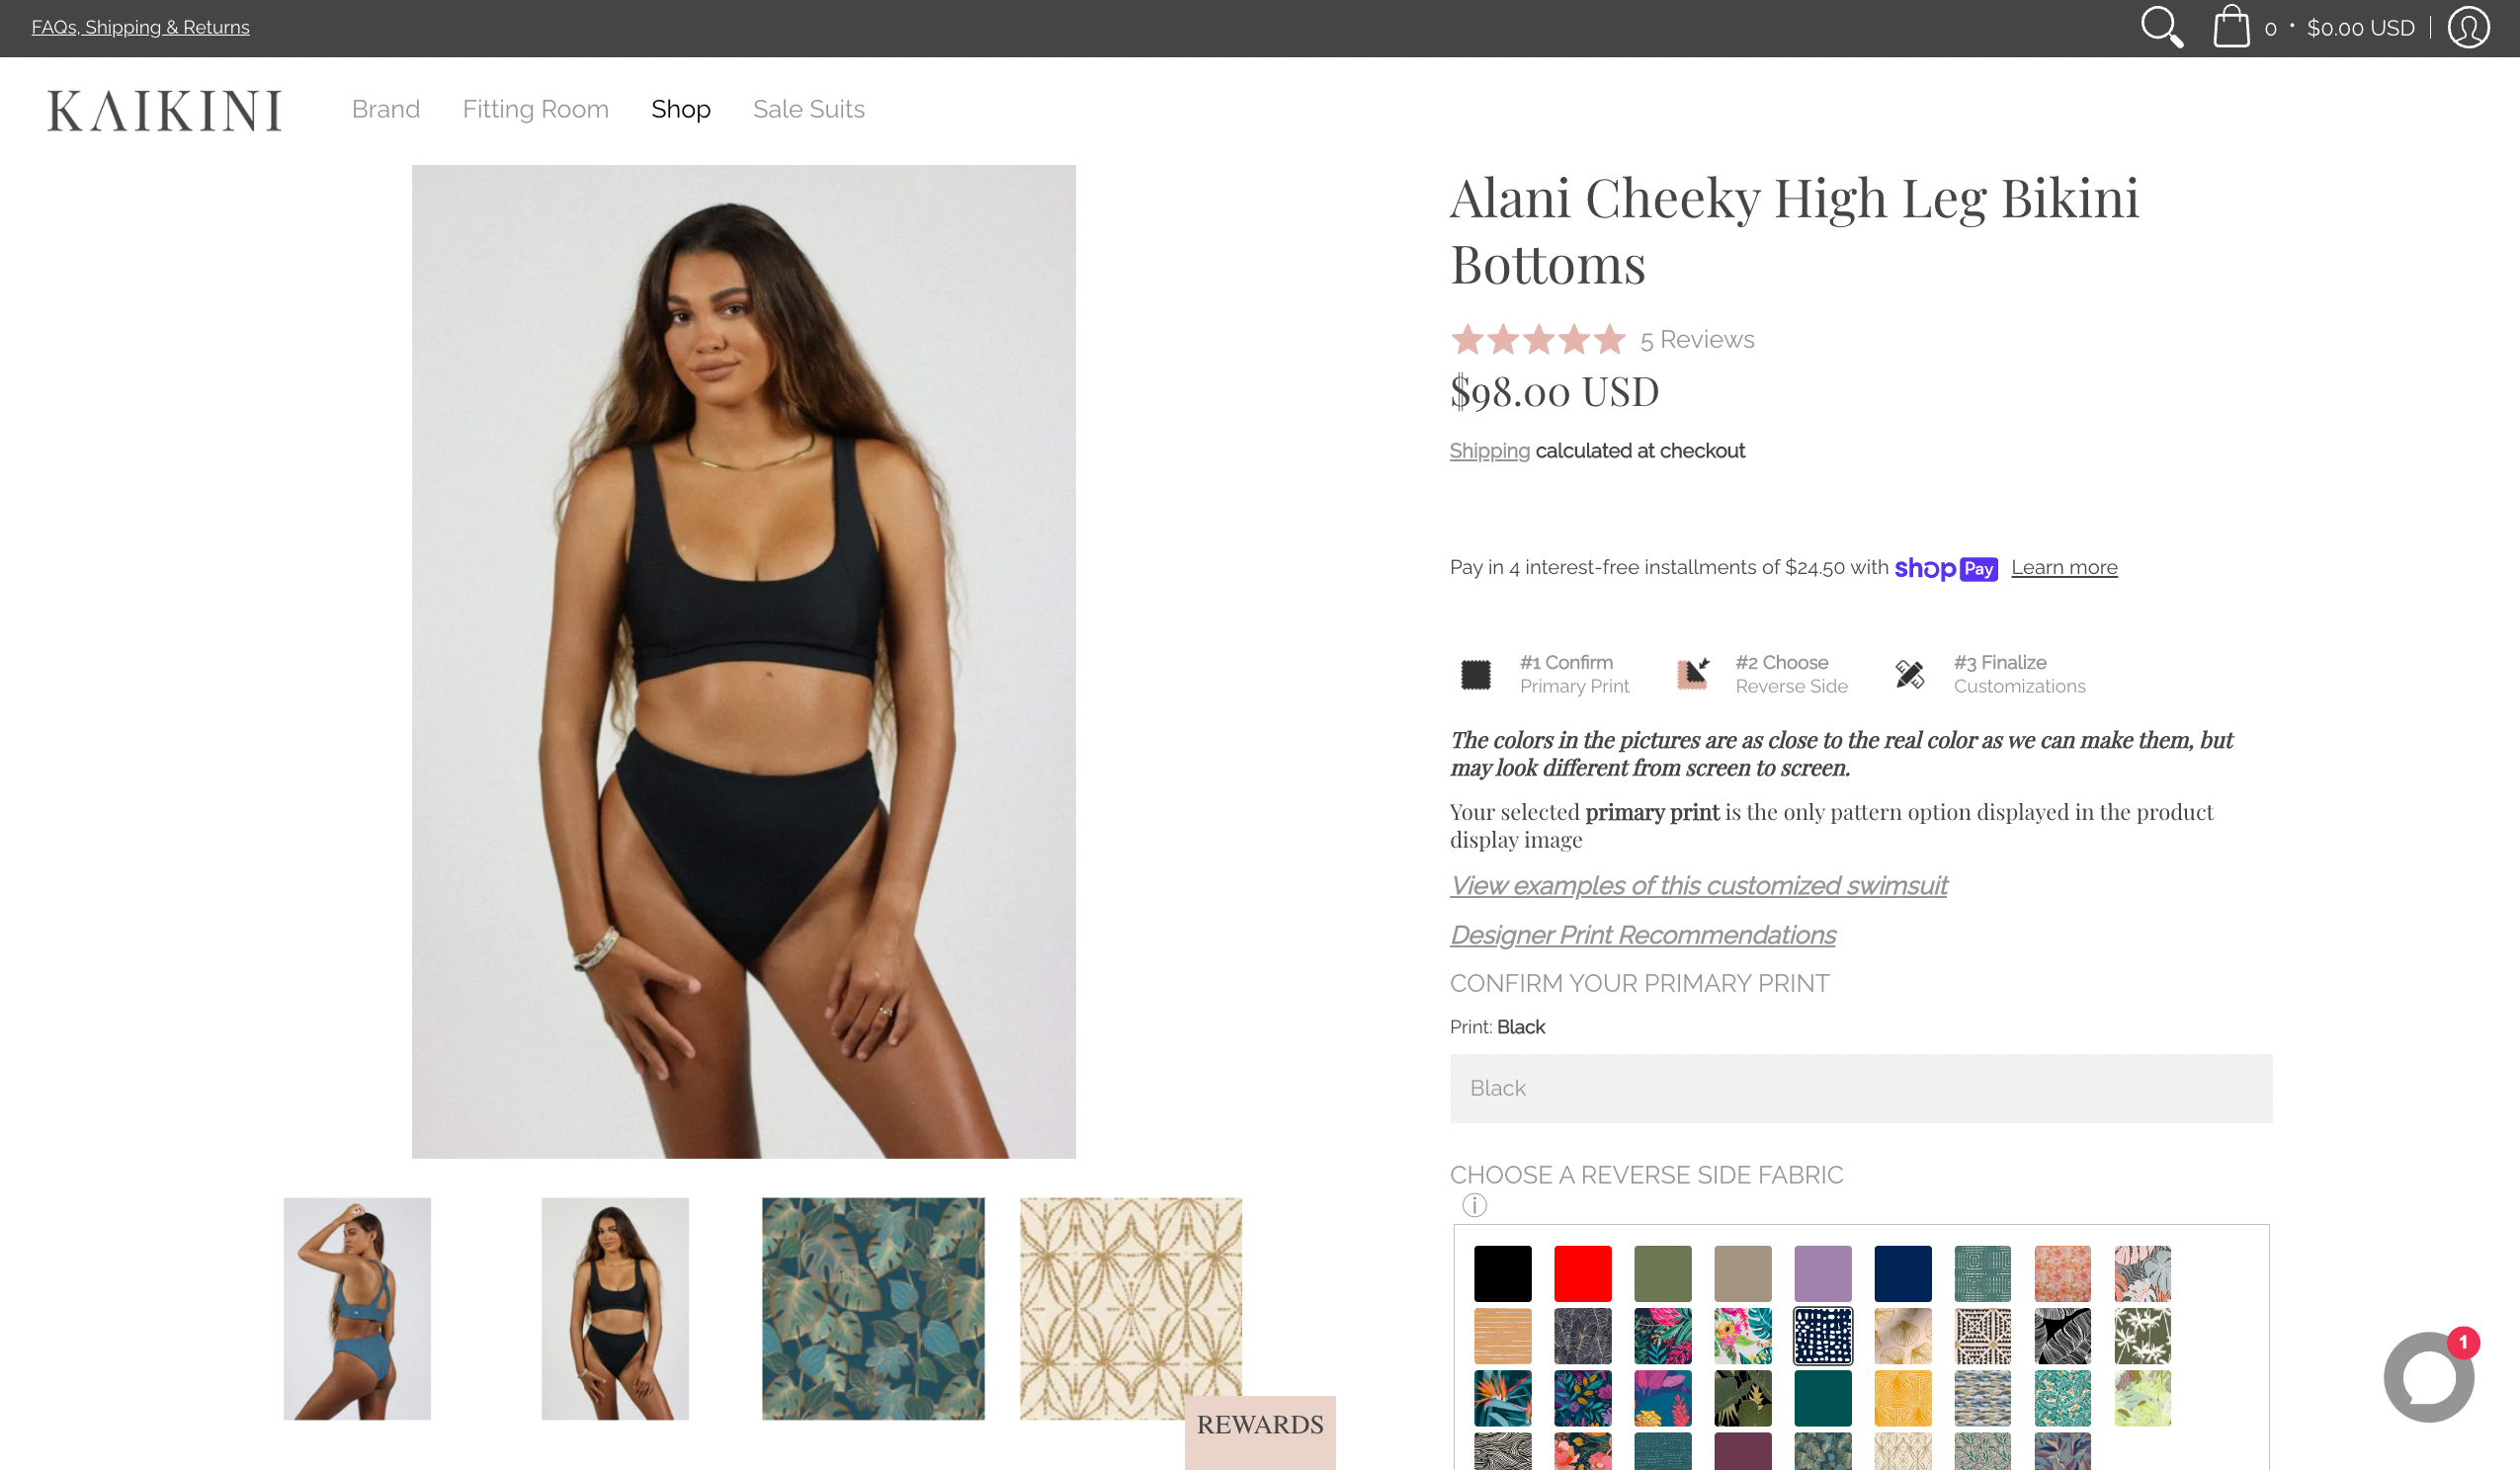 A product page on swimwear brand Kaikini's website, demonstrating custom options